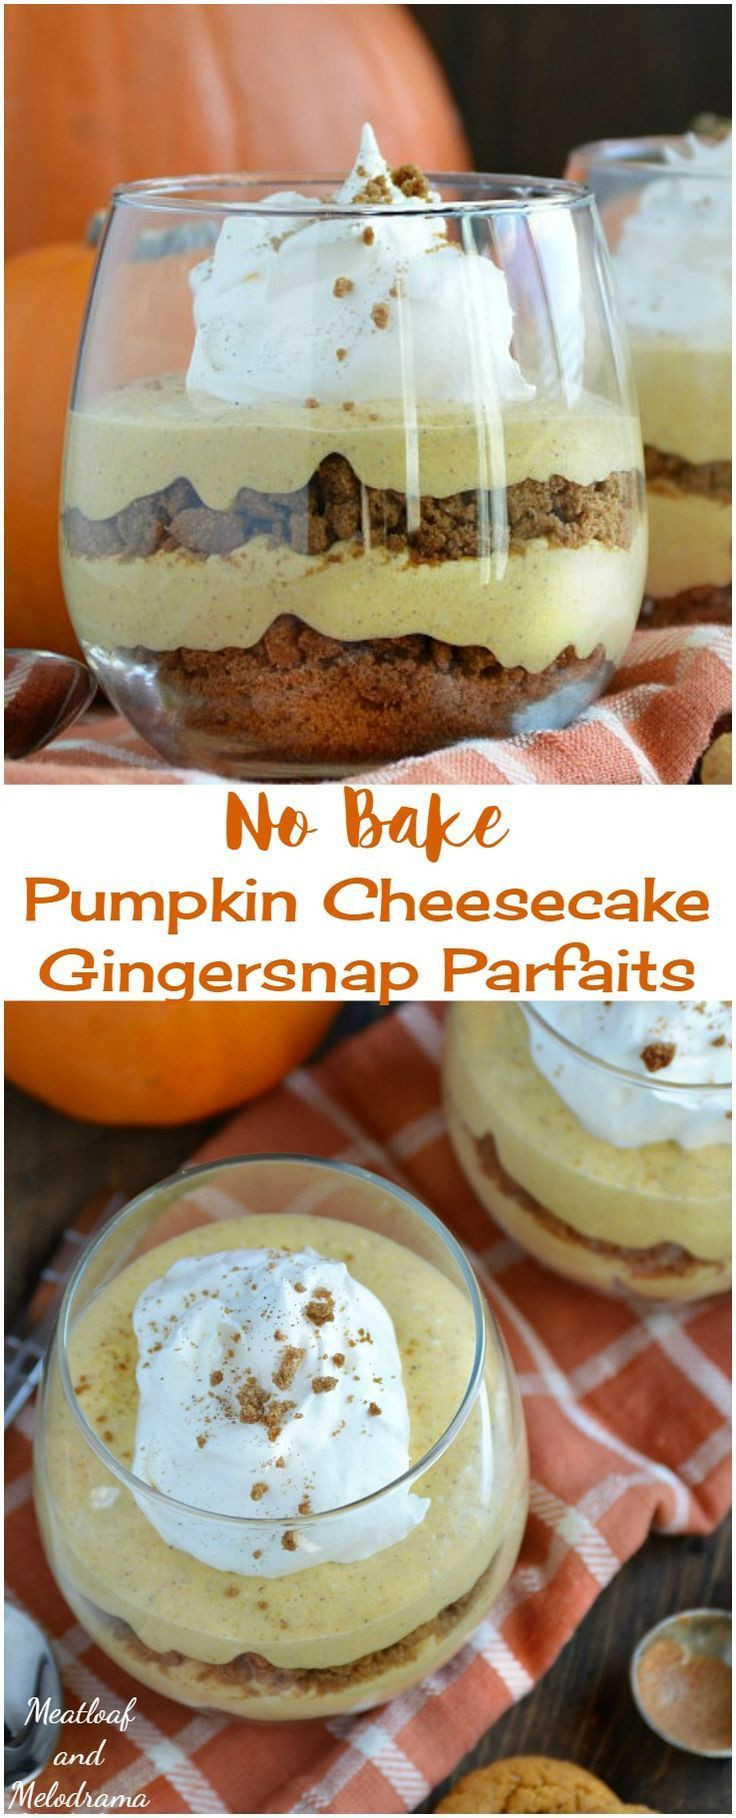 Quick And Easy Fall Desserts
 No Bake Pumpkin Cheesecake Gingersnap Parfaits